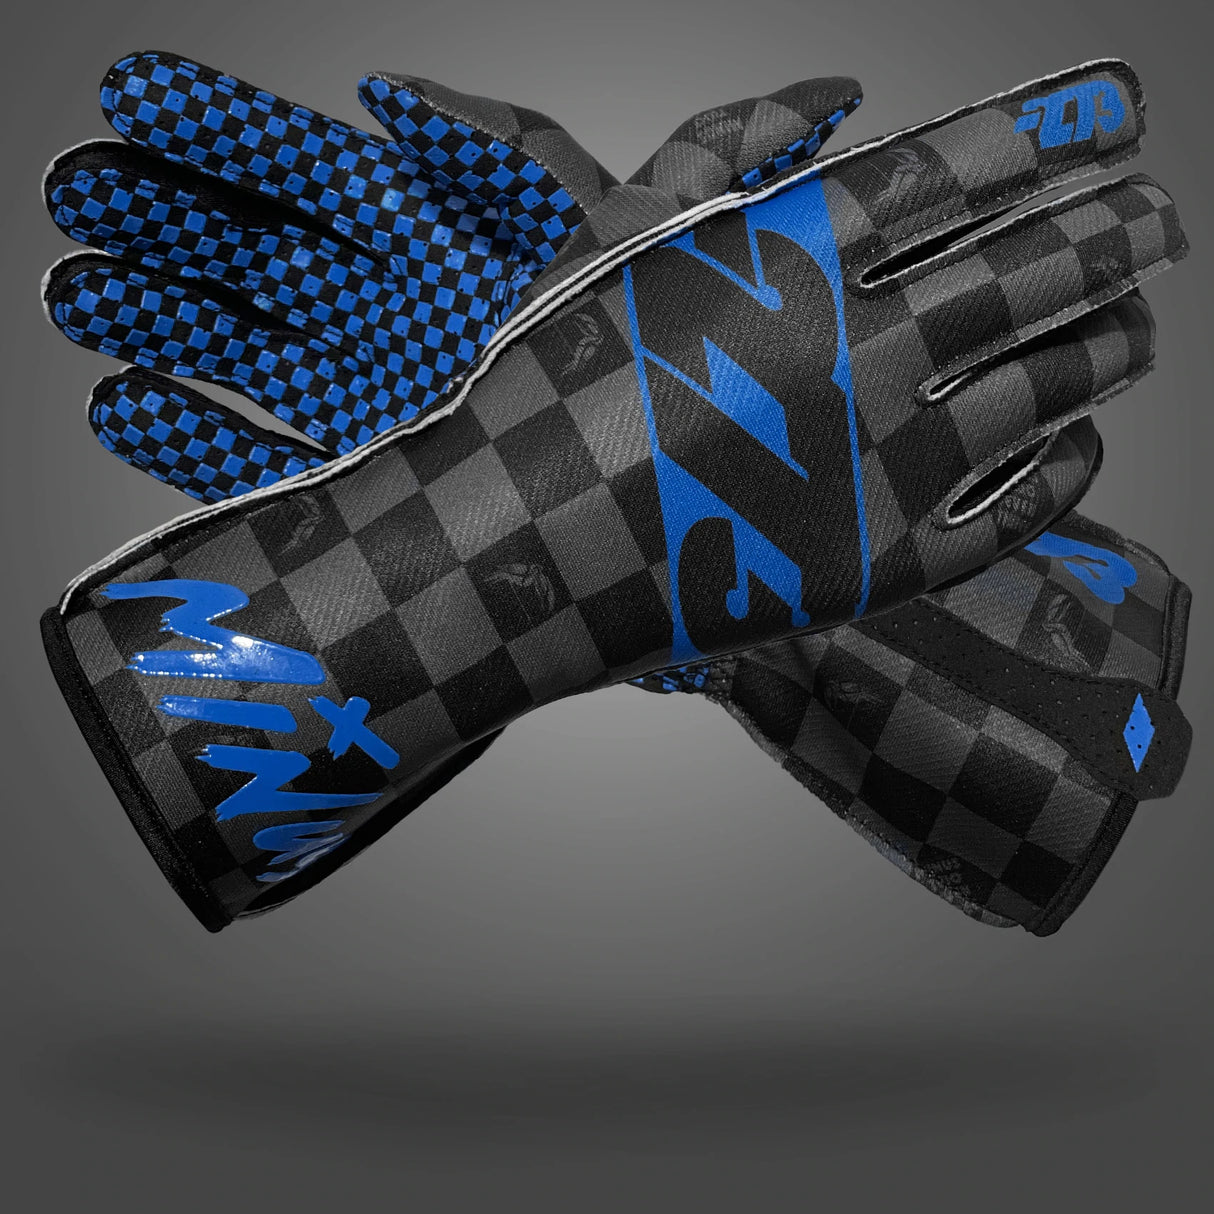 -273 Crenshaw Glove Blue Black - Medium